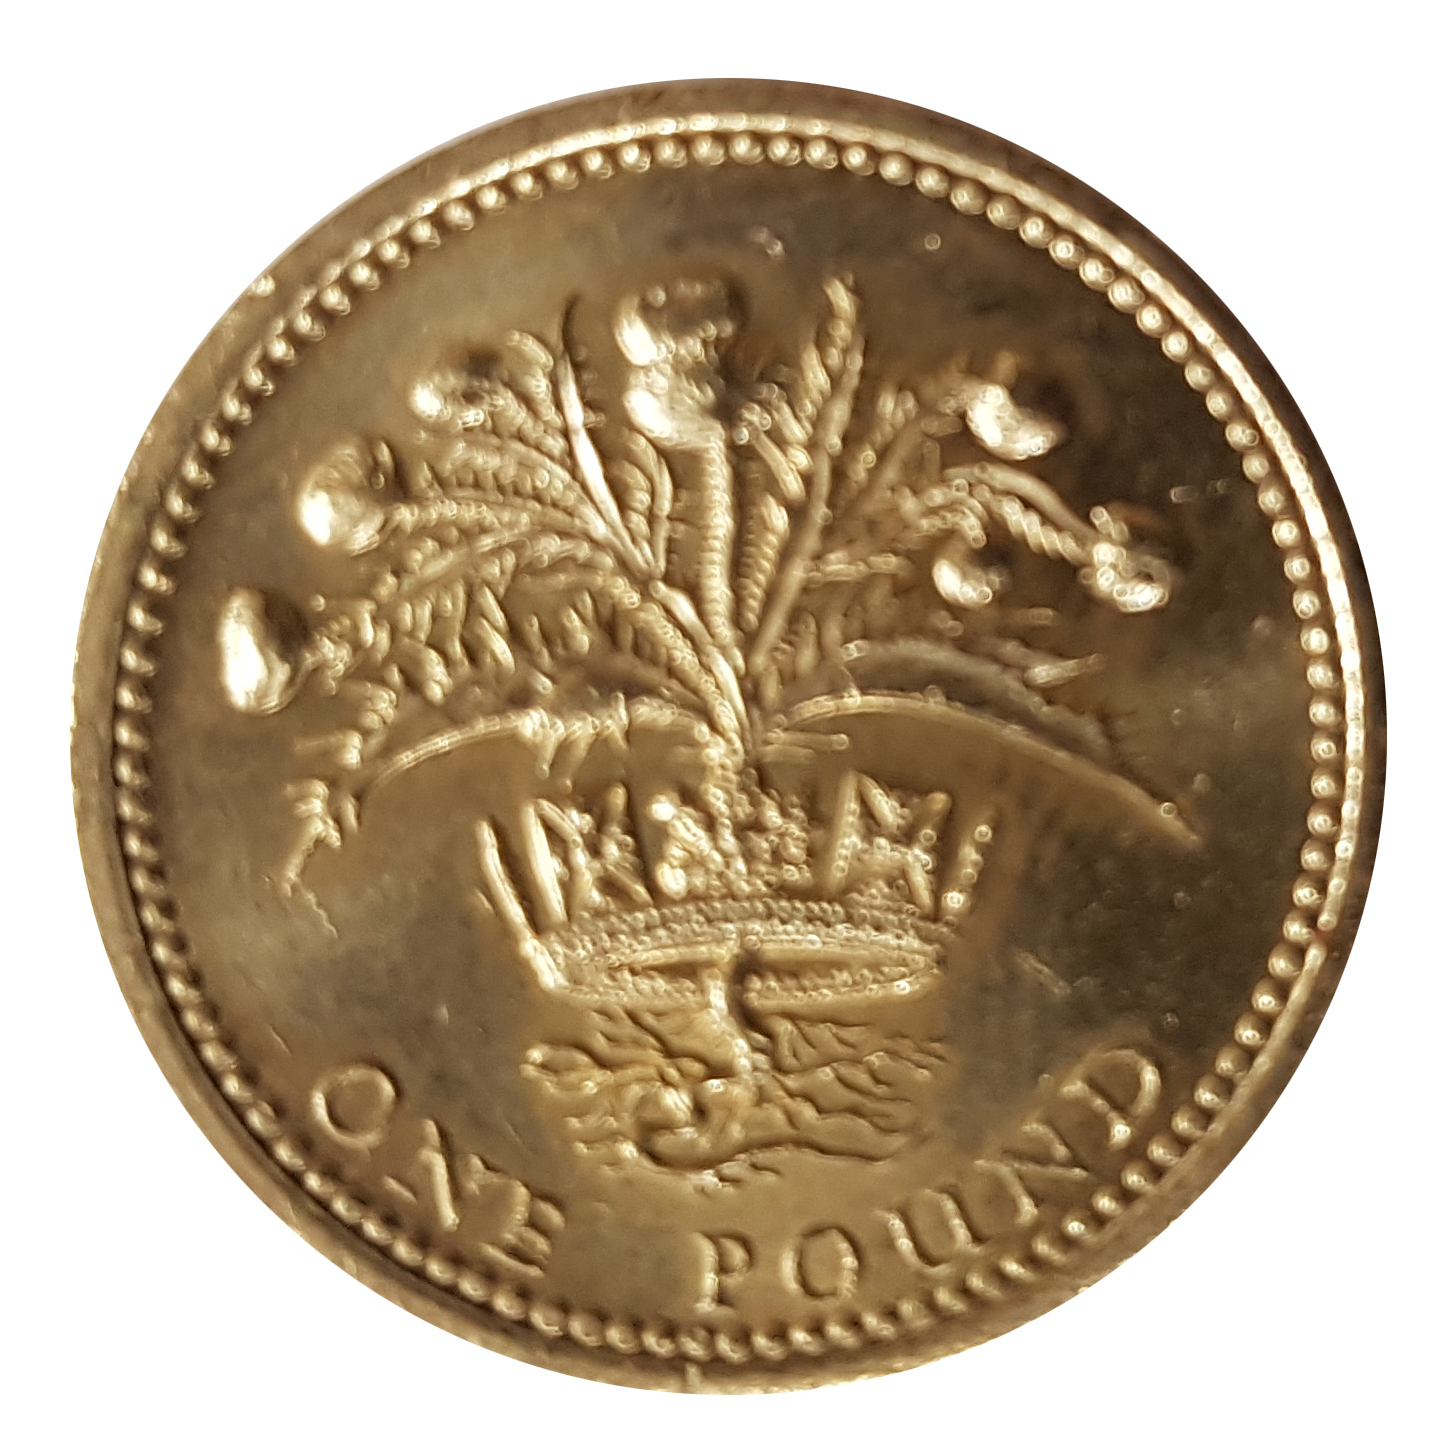 First coins. One pound монета. 1 Поунд монета в рублях. Pounds монетки. One pound монета в рублях.